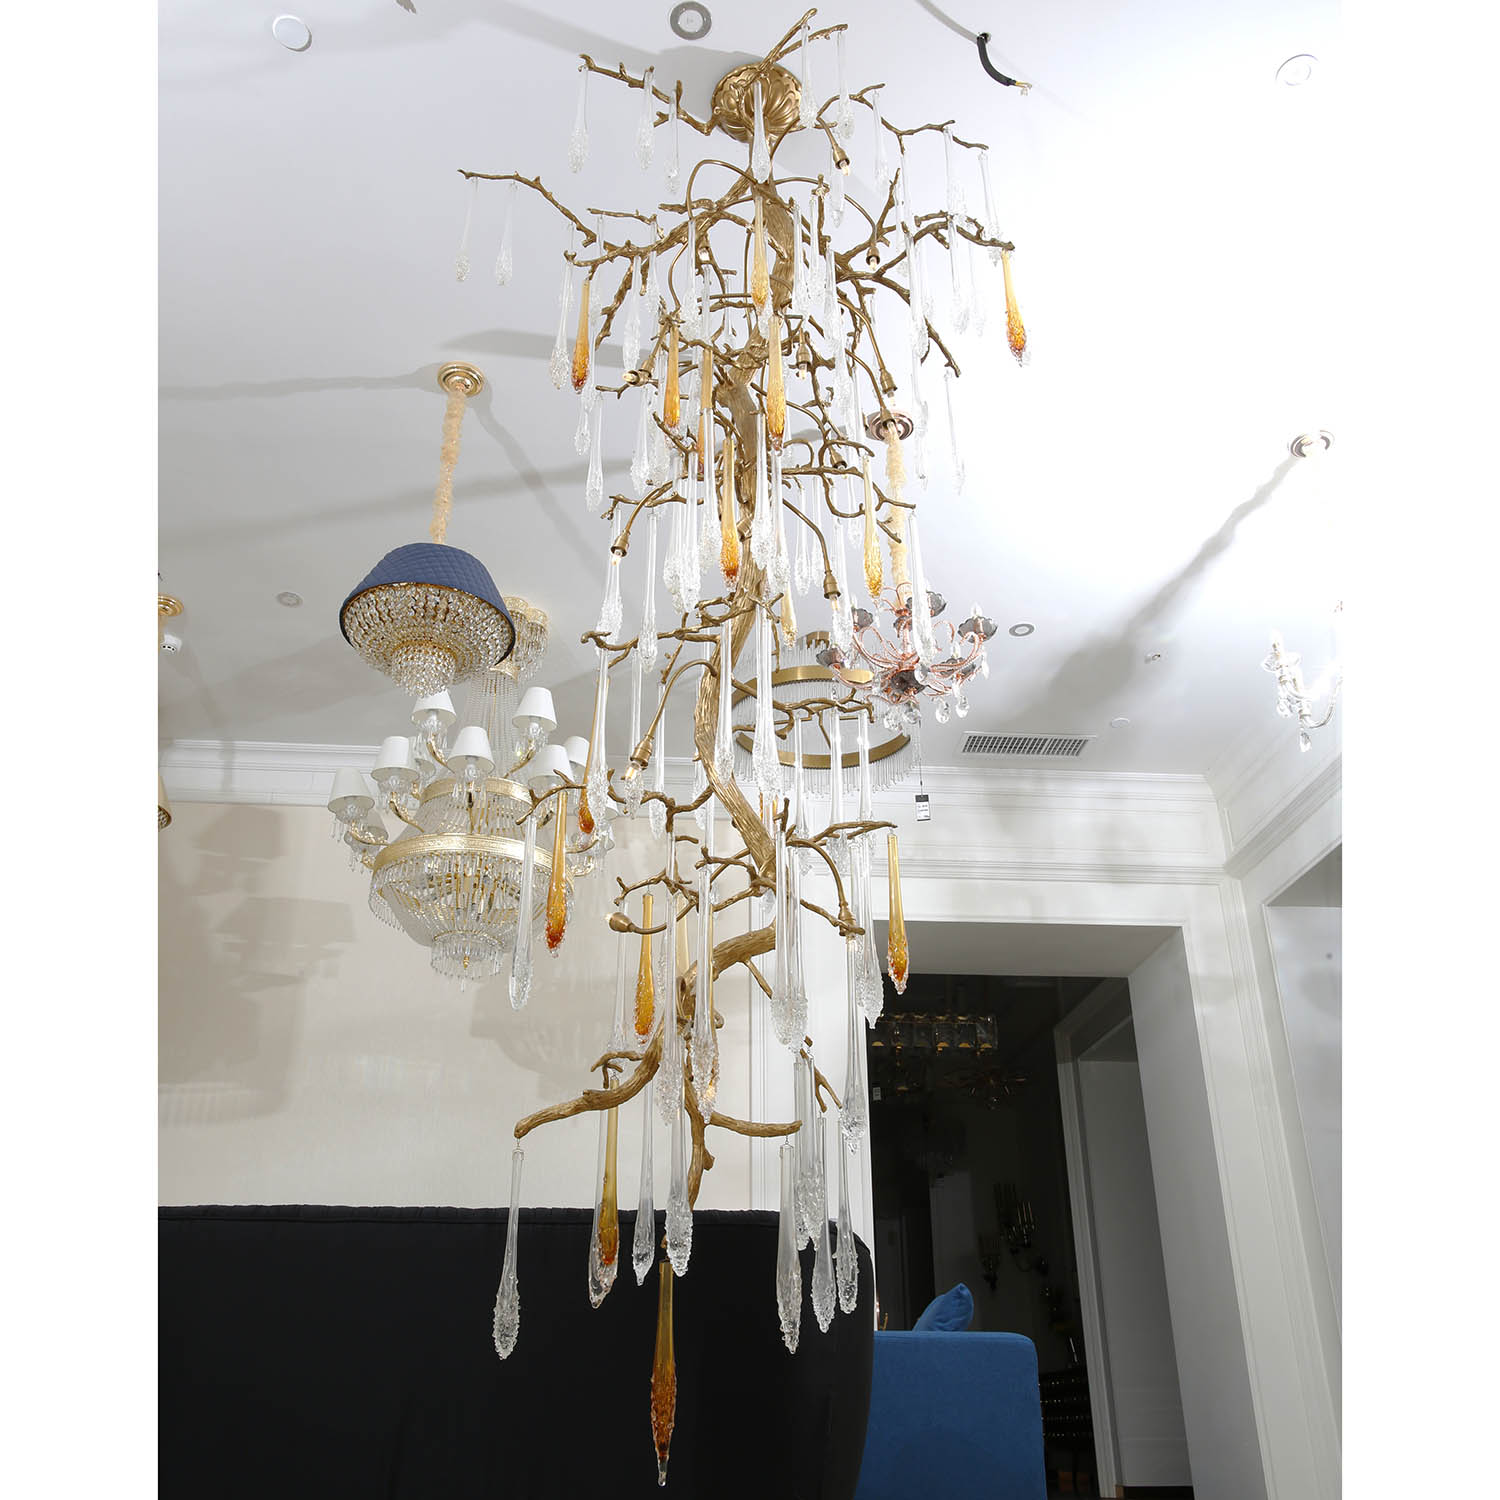 Decorative Long Tree Shape Villa Interior Glass Chandelier (KA520-C)